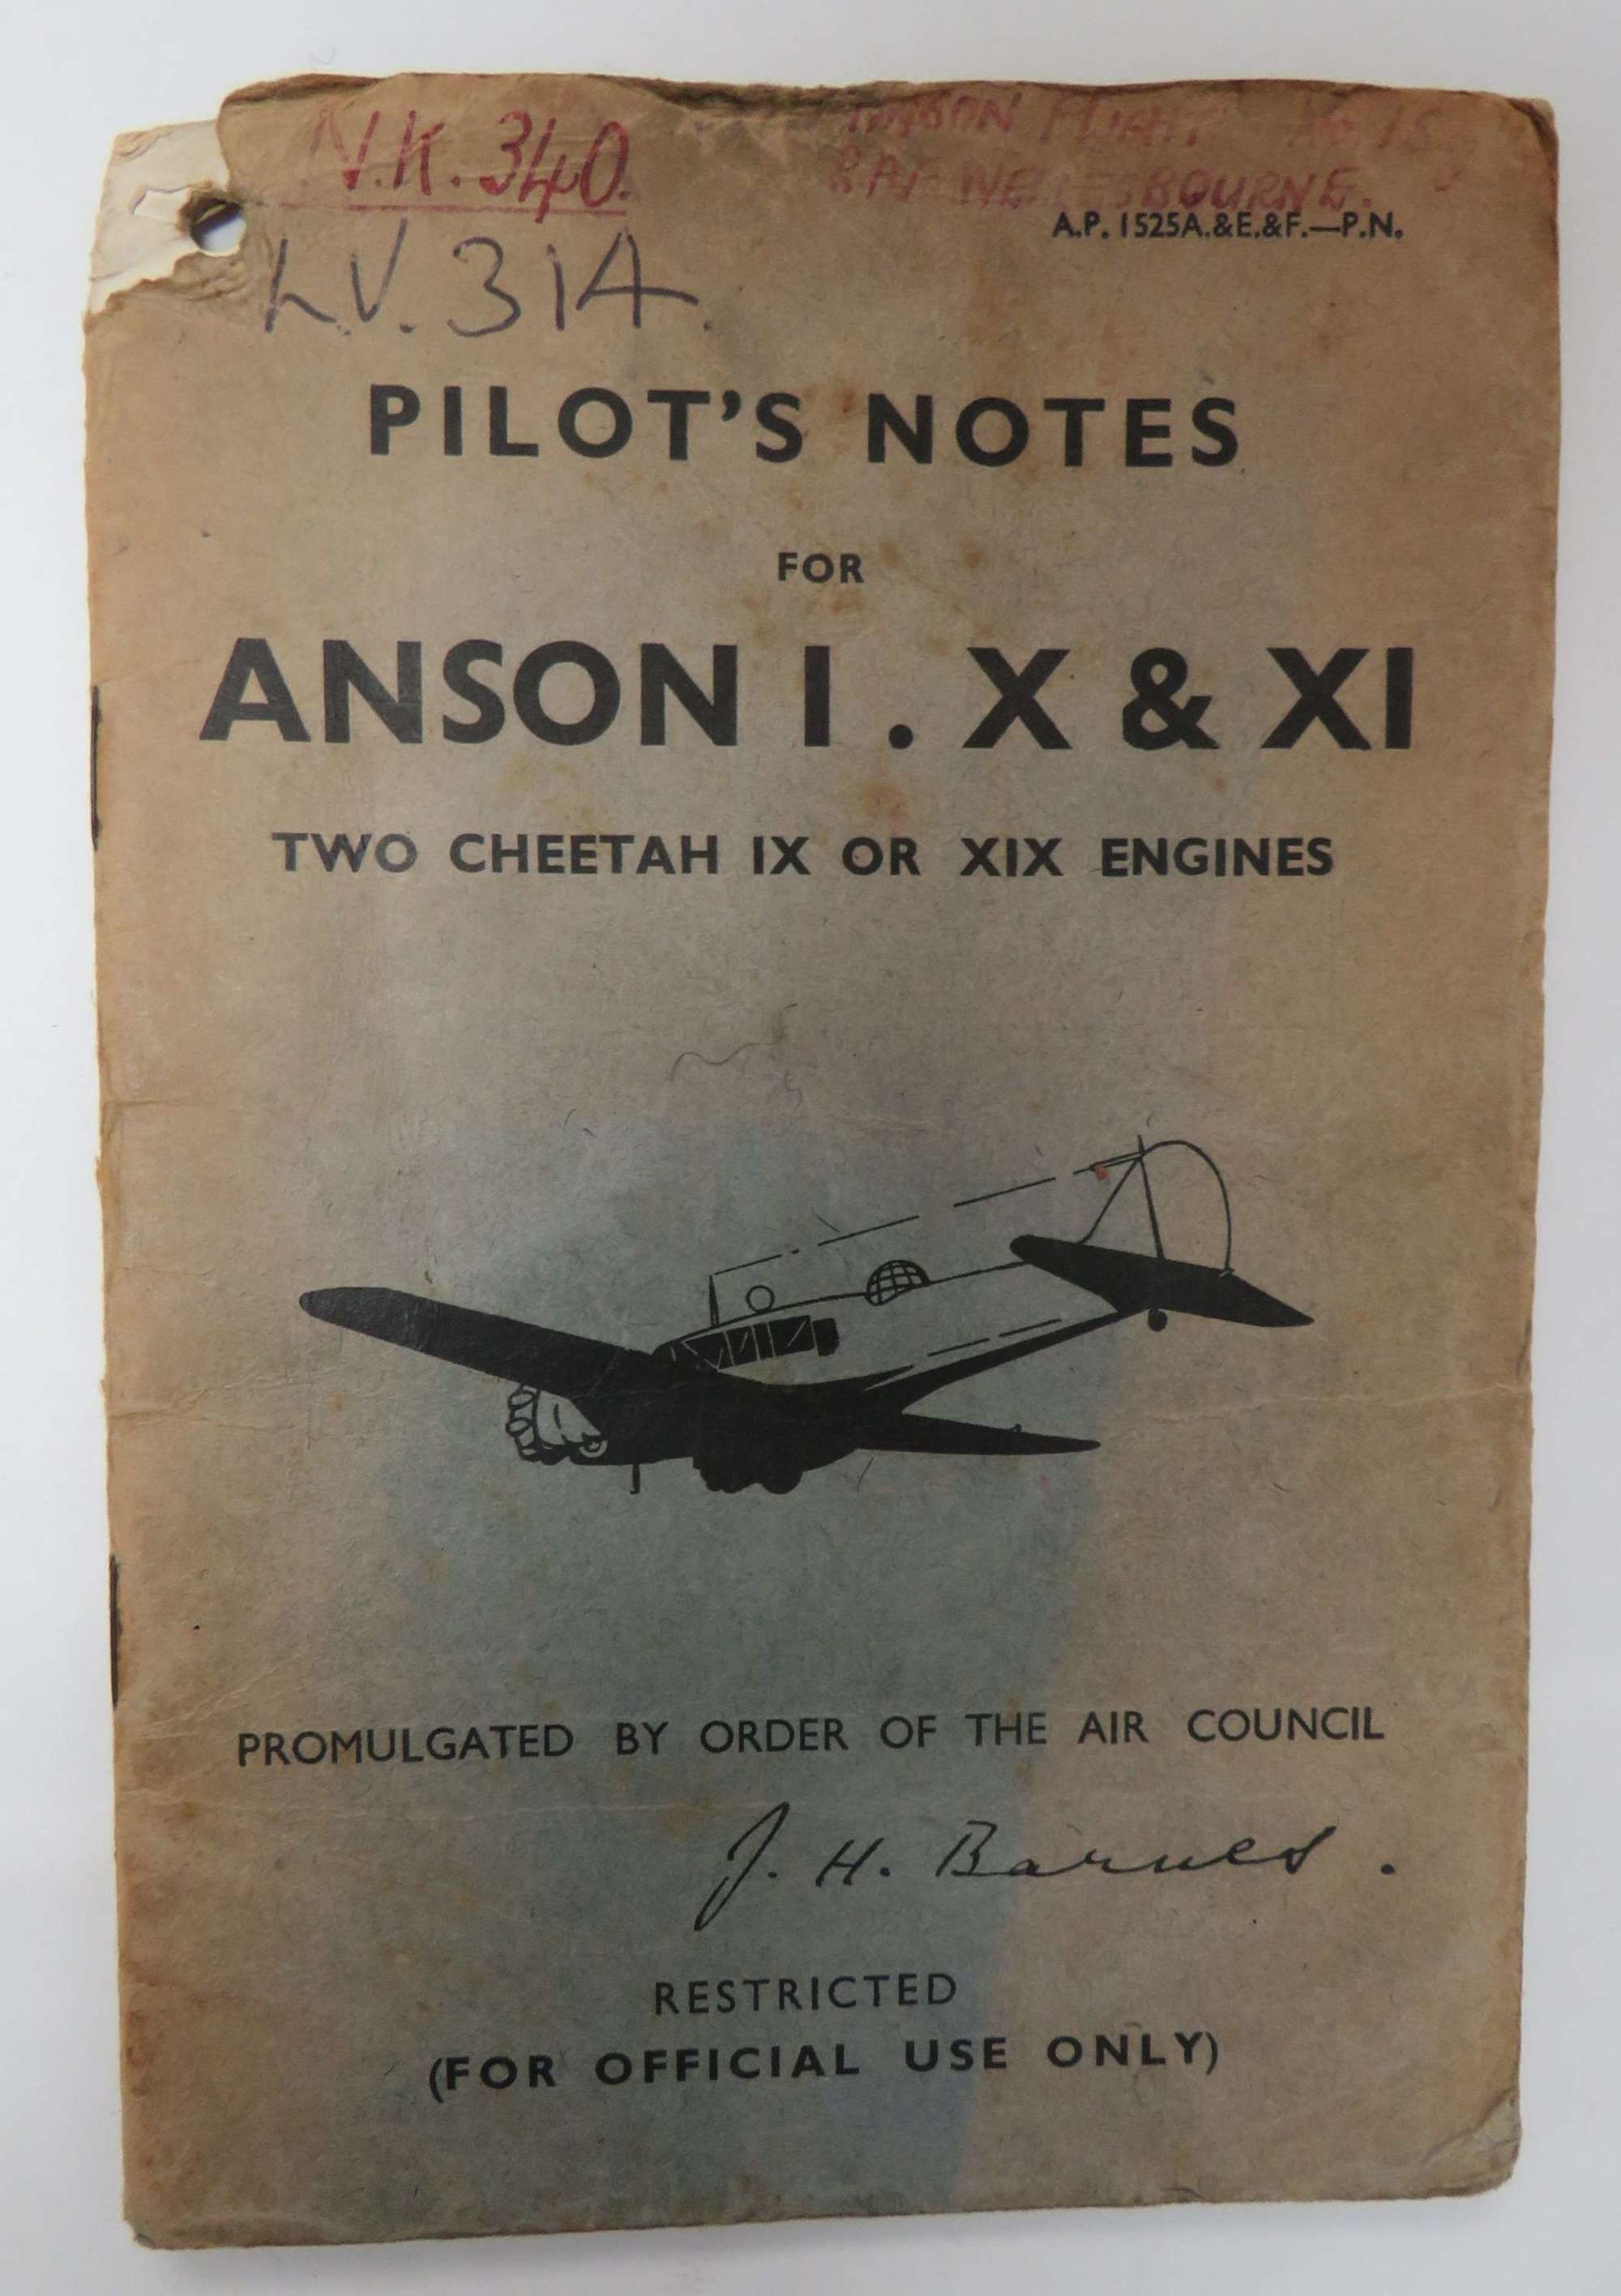 Original Anson 1. X & X1 Pilot Notes